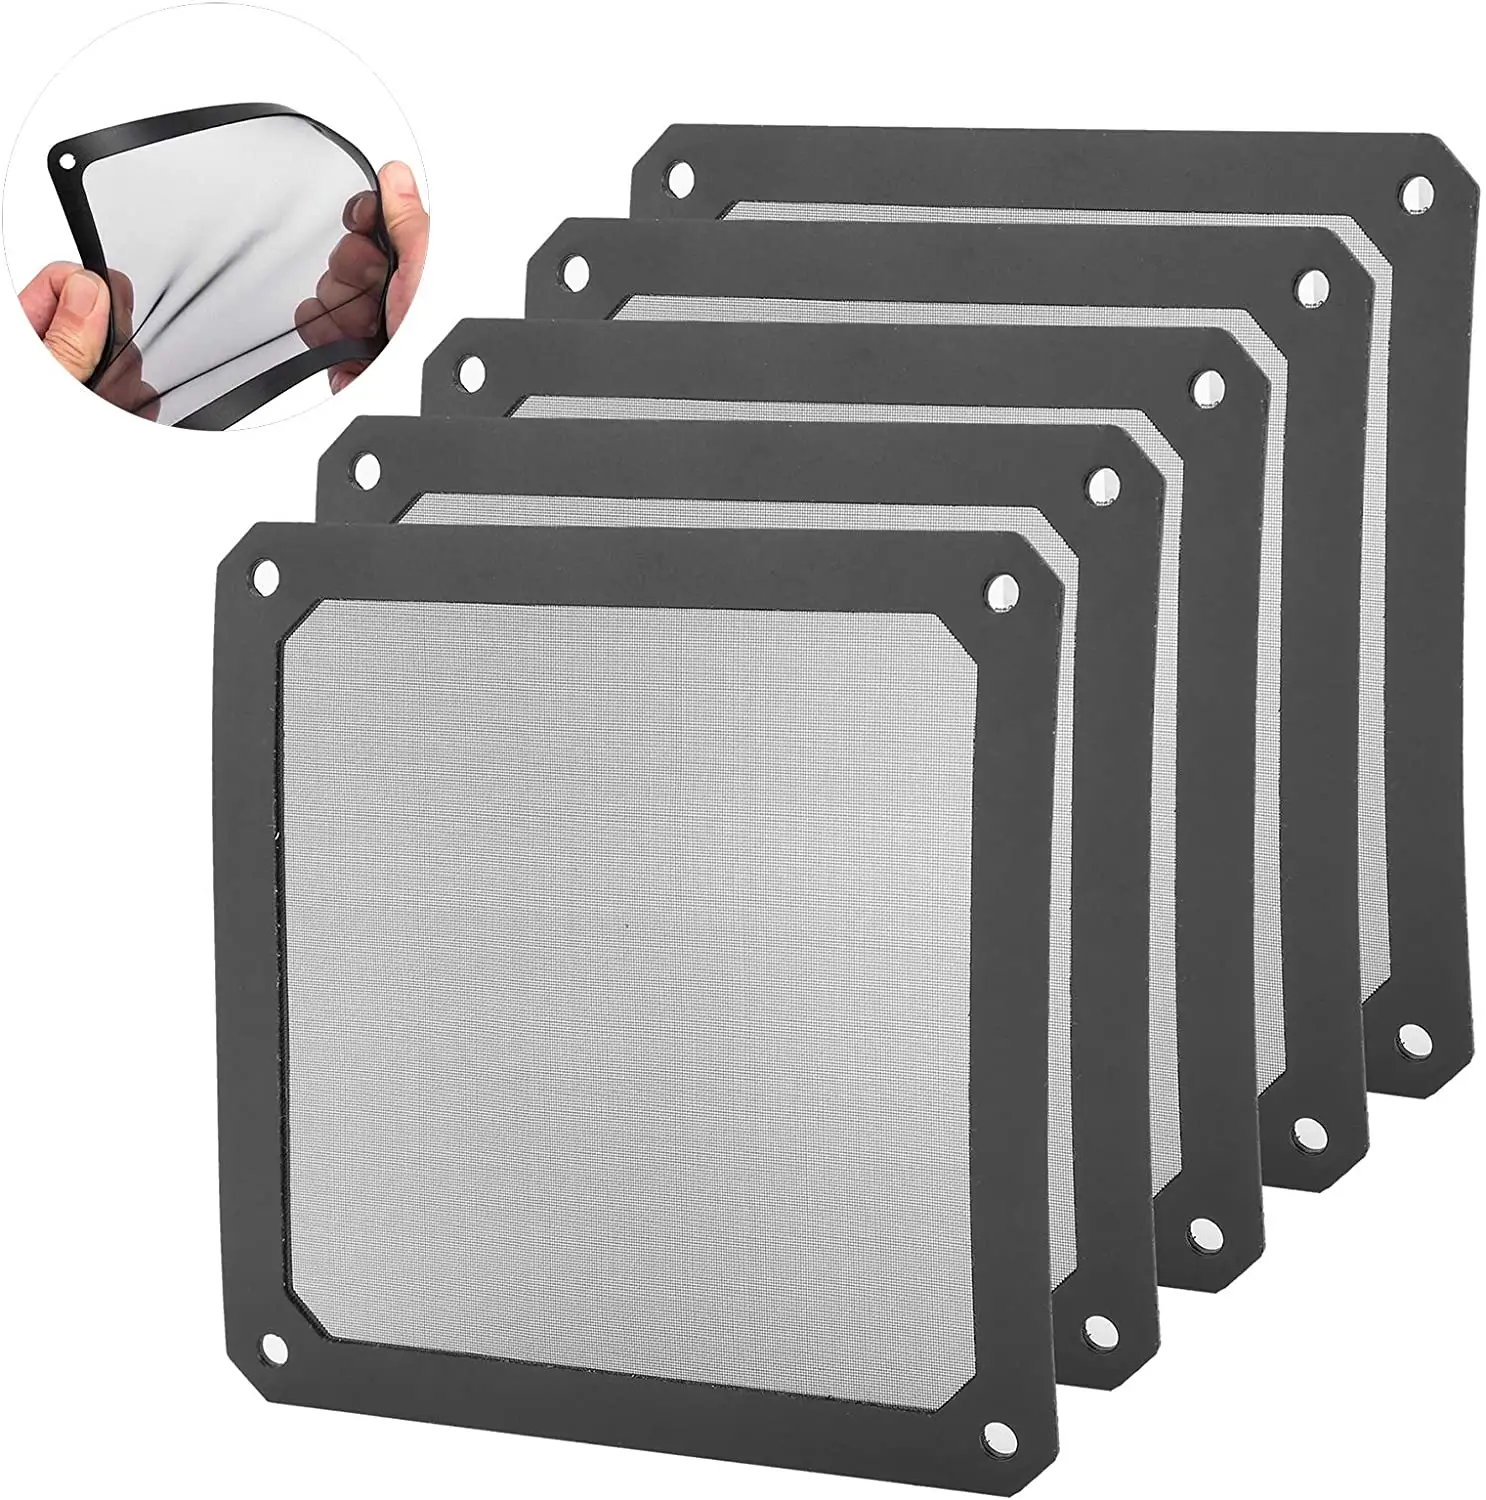 12 X 12 cm computer pc case cooling fan dust filter mesh net cover